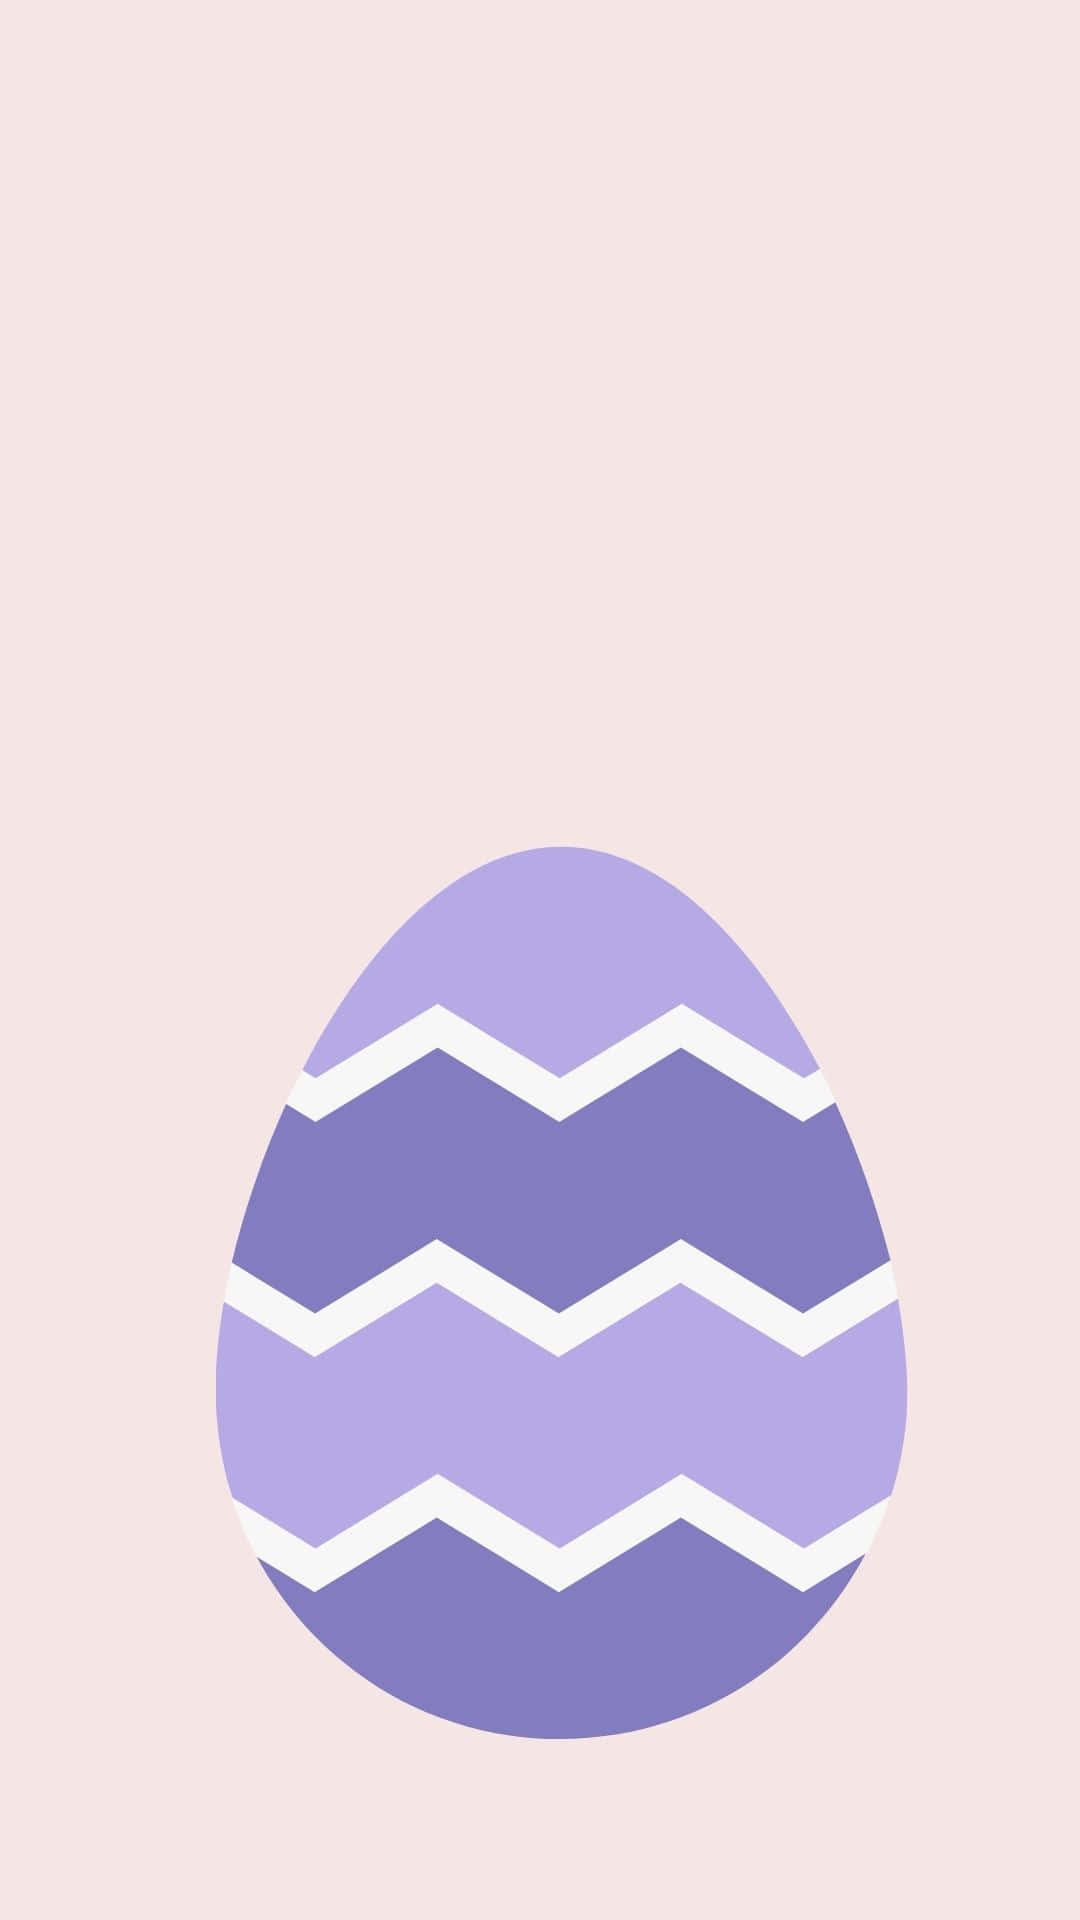 Unacesta De Huevos De Pascua Pintados A Mano De Diferentes Colores. Fondo de pantalla